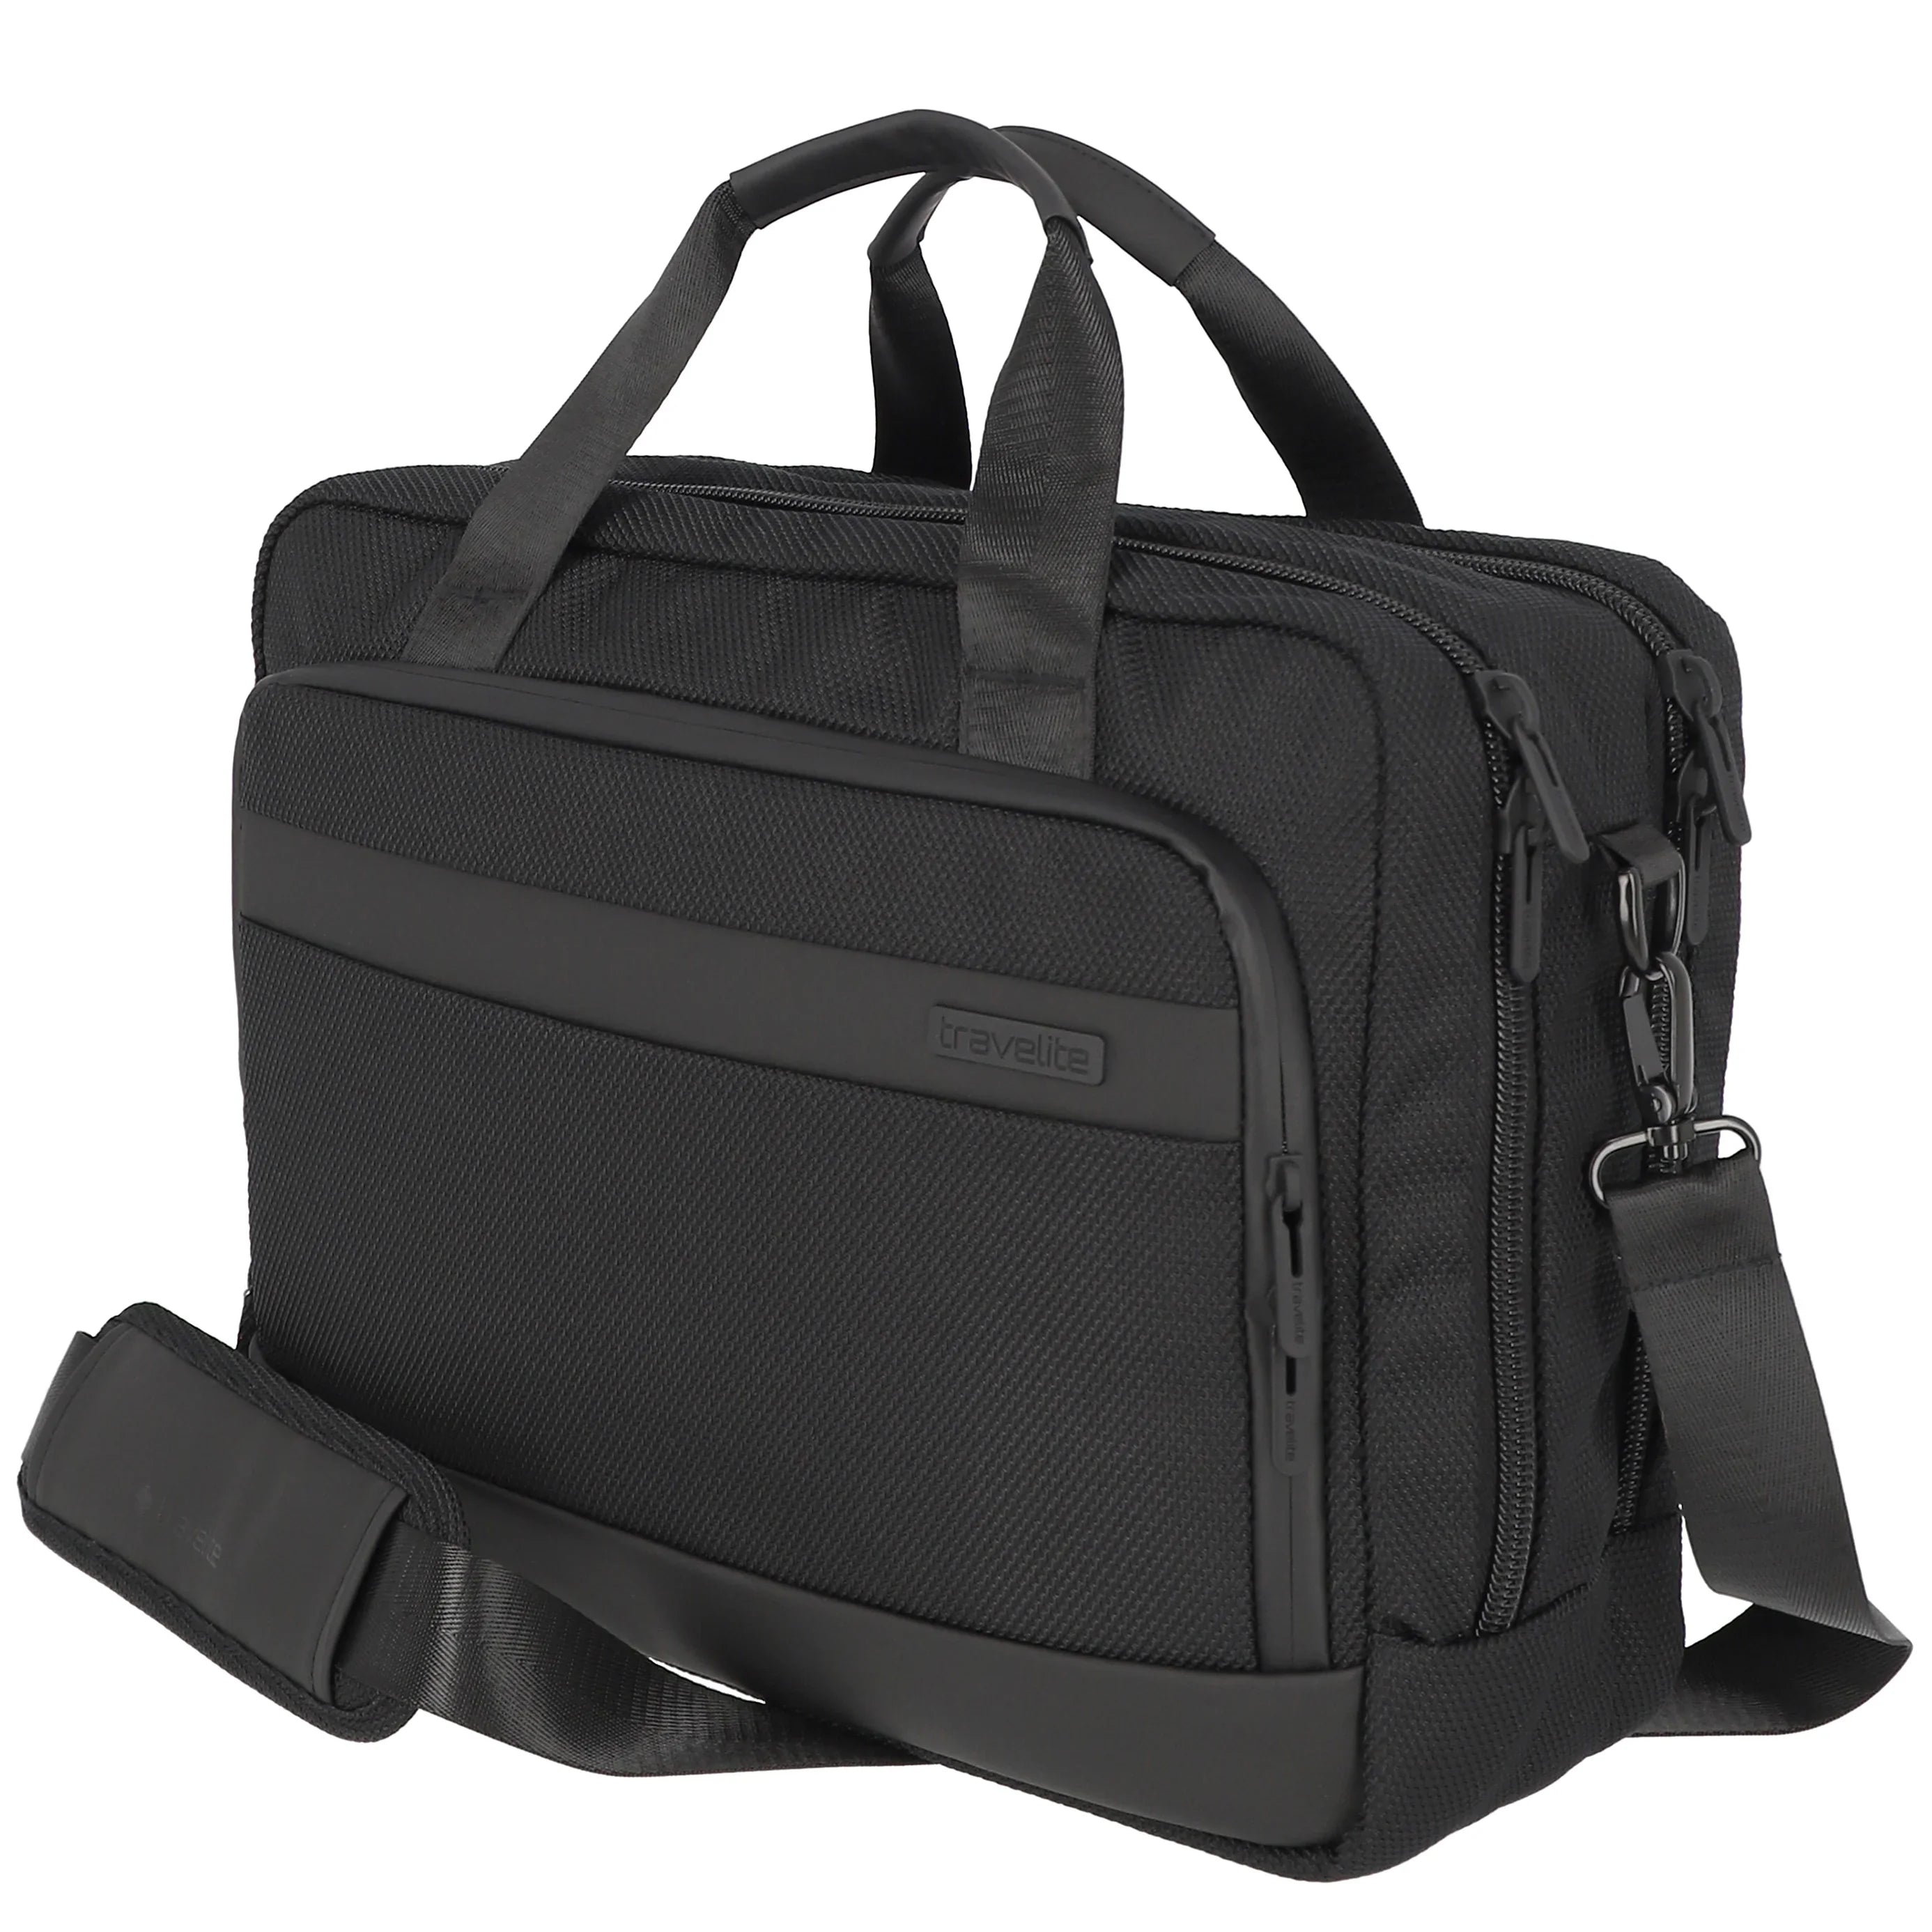 Travelite Meet laptop bag 42 cm - Black